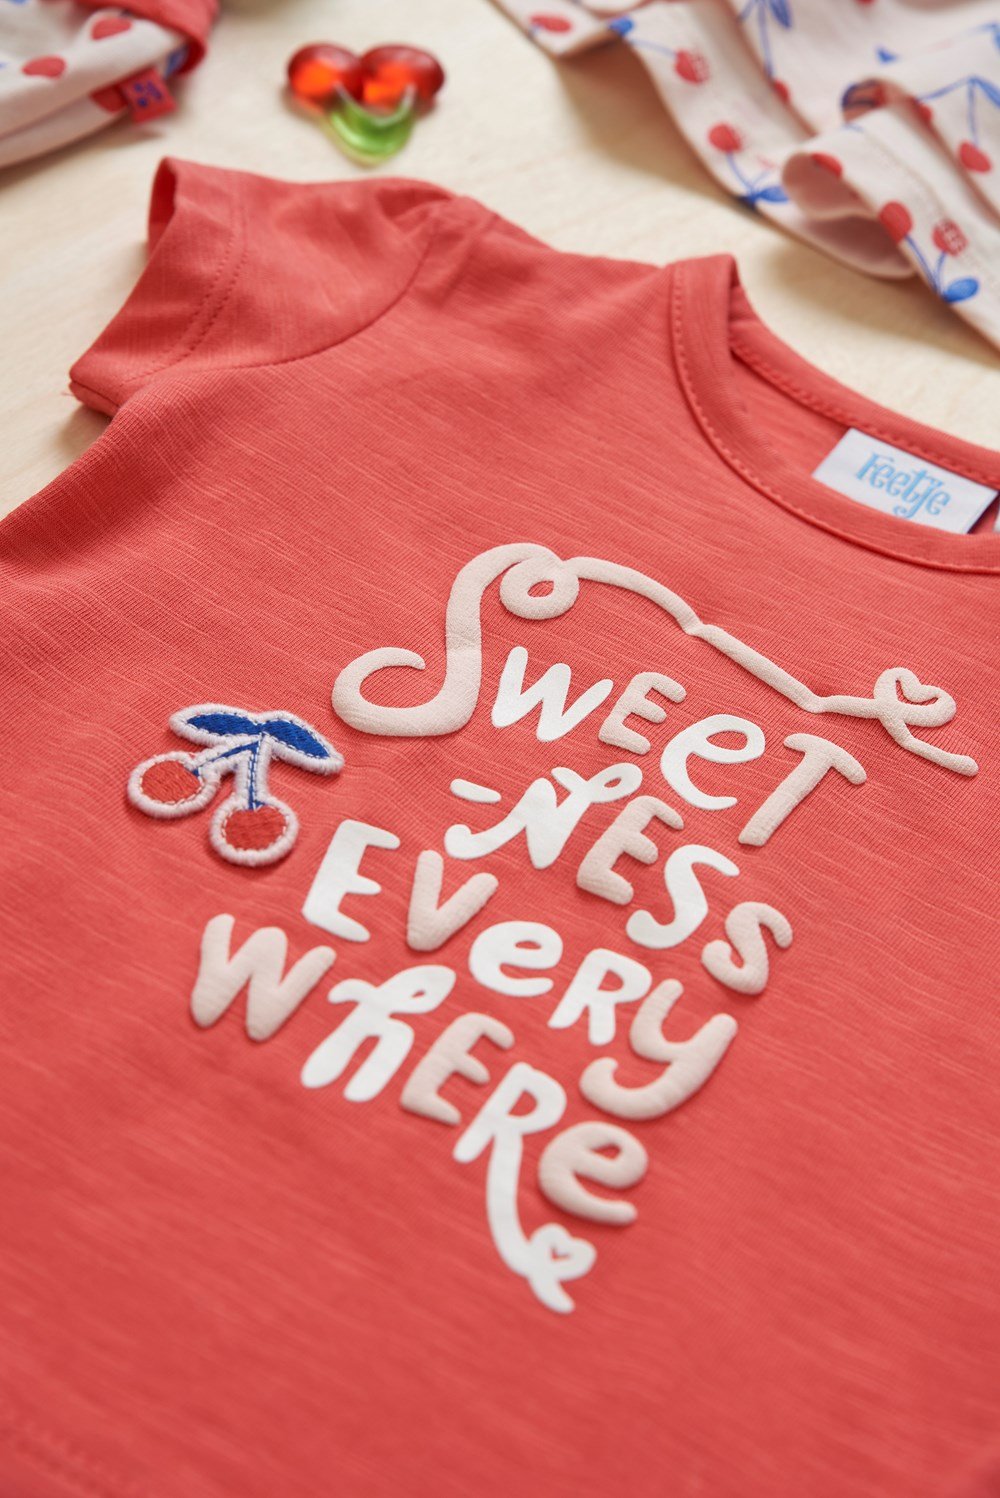 Meisjes T-shirt Everywhere - Cherry Sweetness van Feetje in de kleur Rood in maat 68.